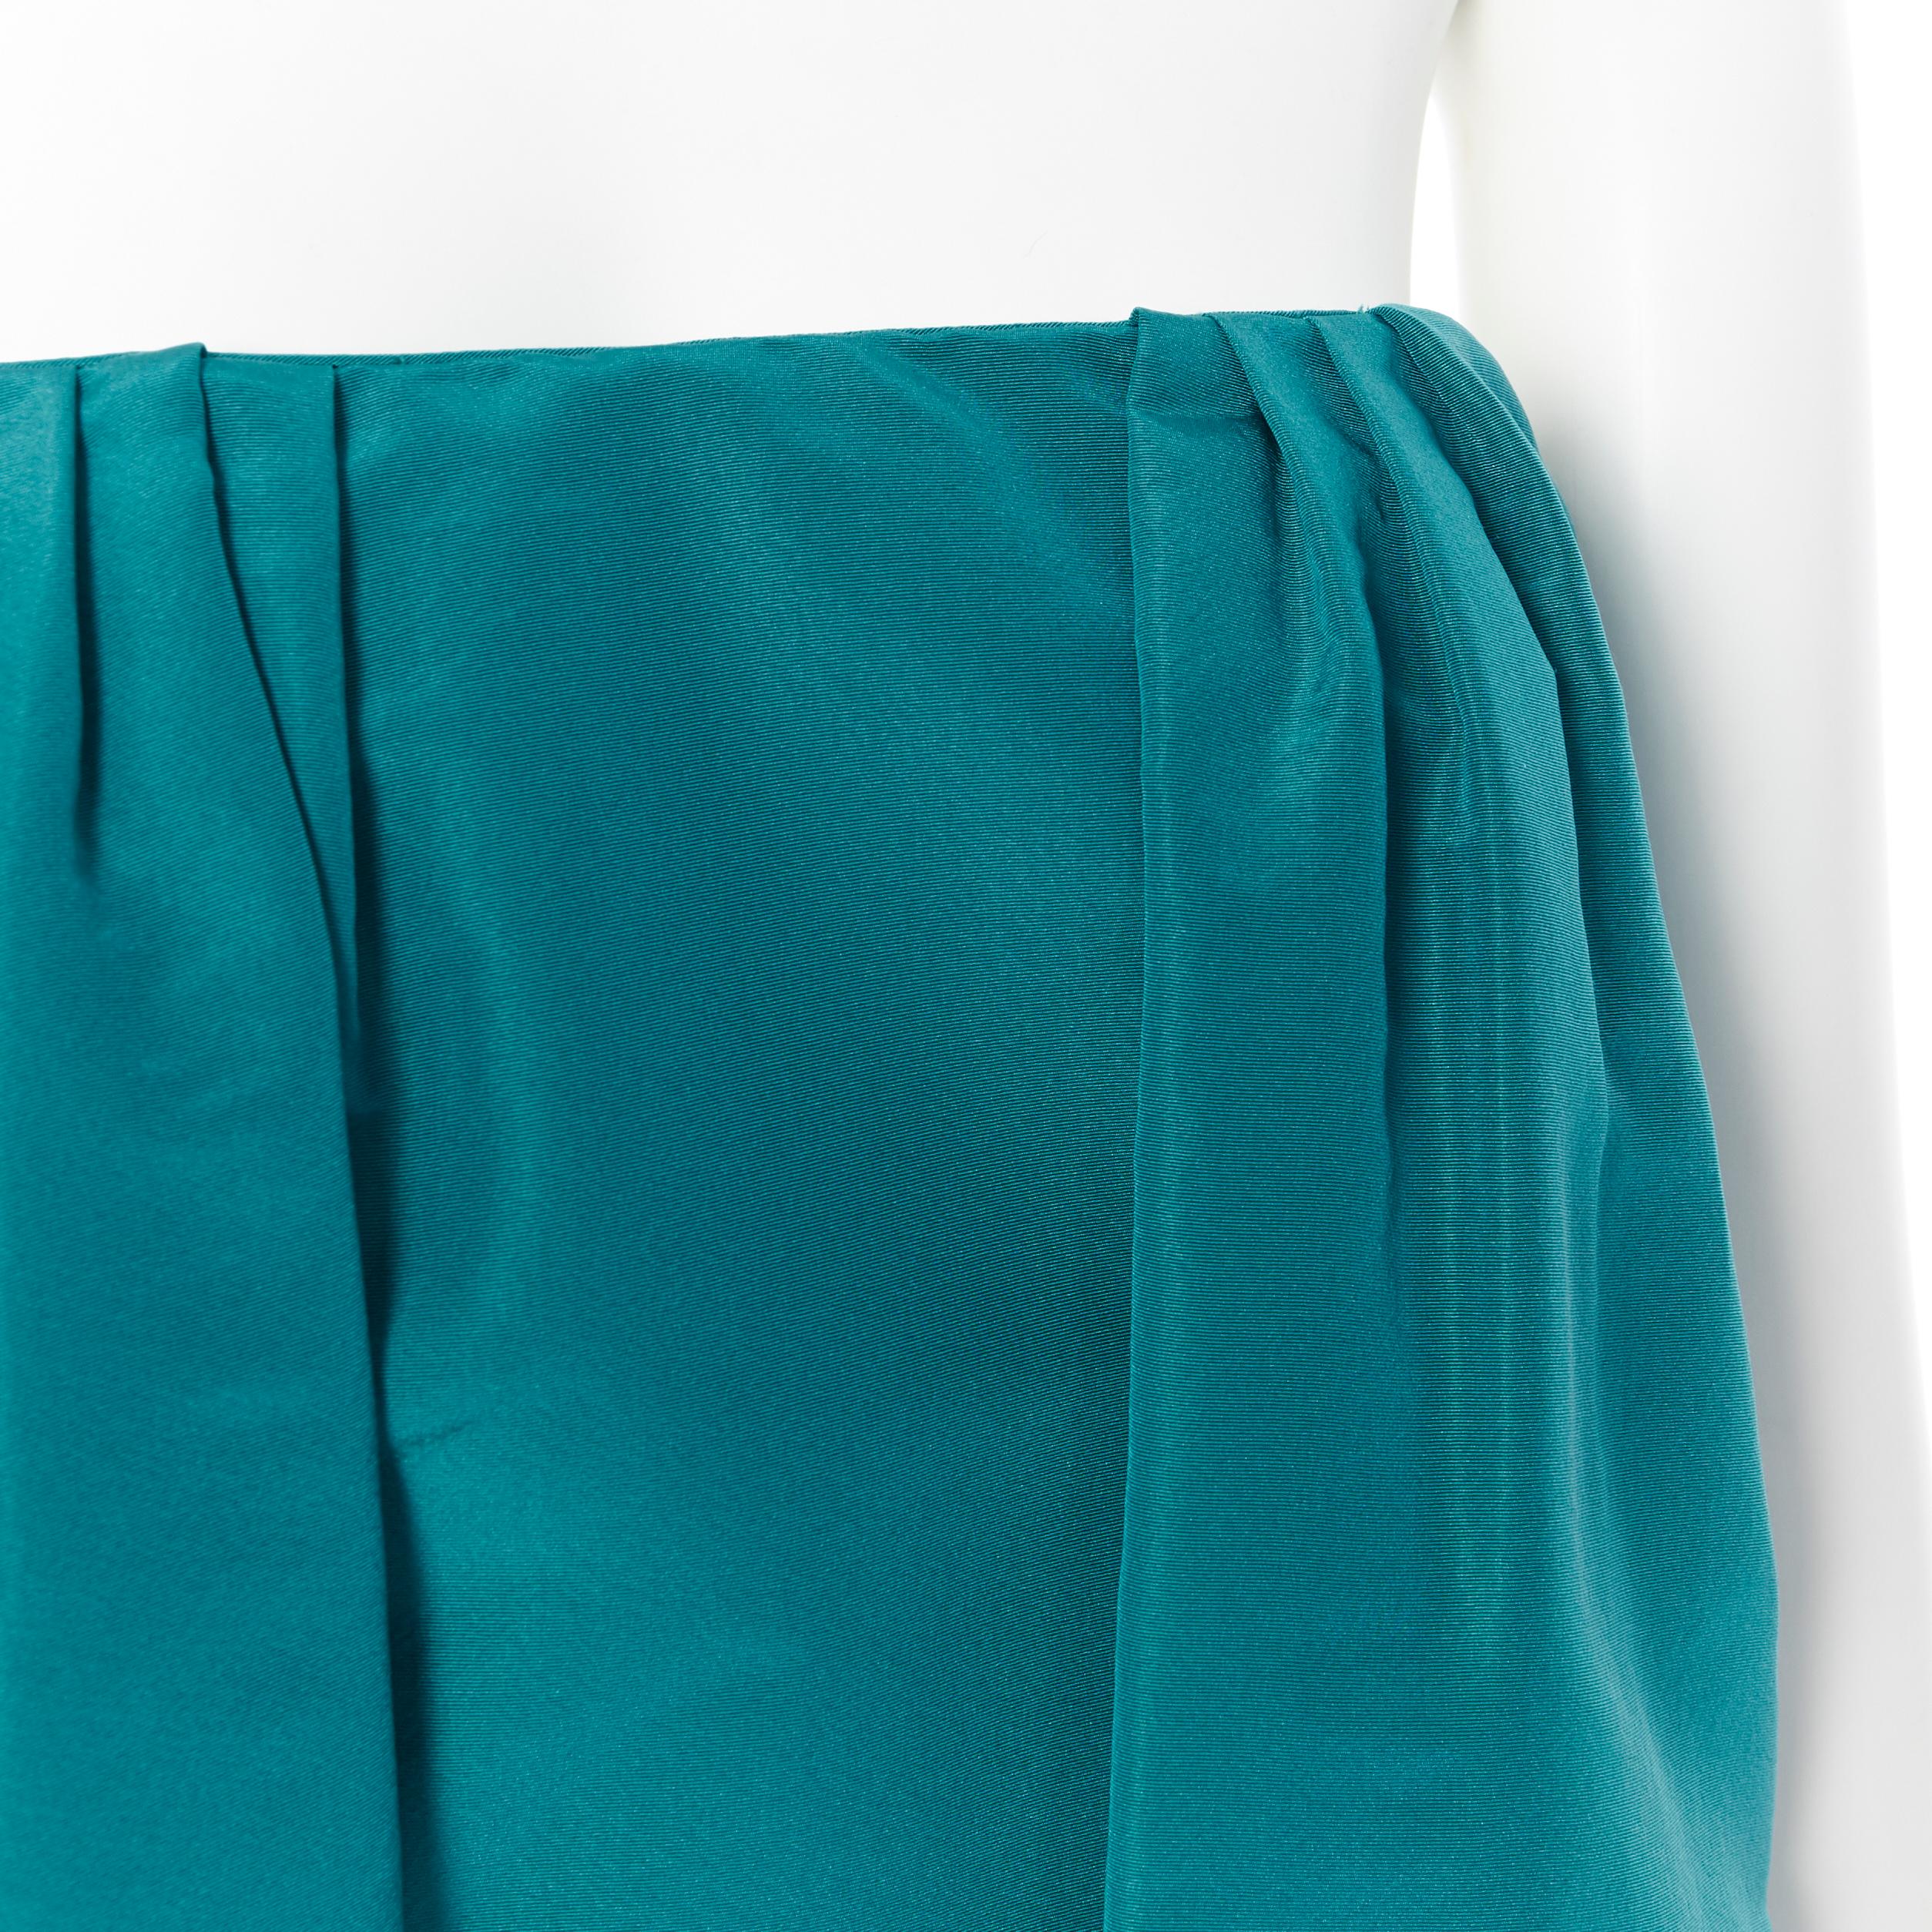 OSCAR DE LA RENTA AW13 100% silk green corset voluminous bubble dress US4 S 1